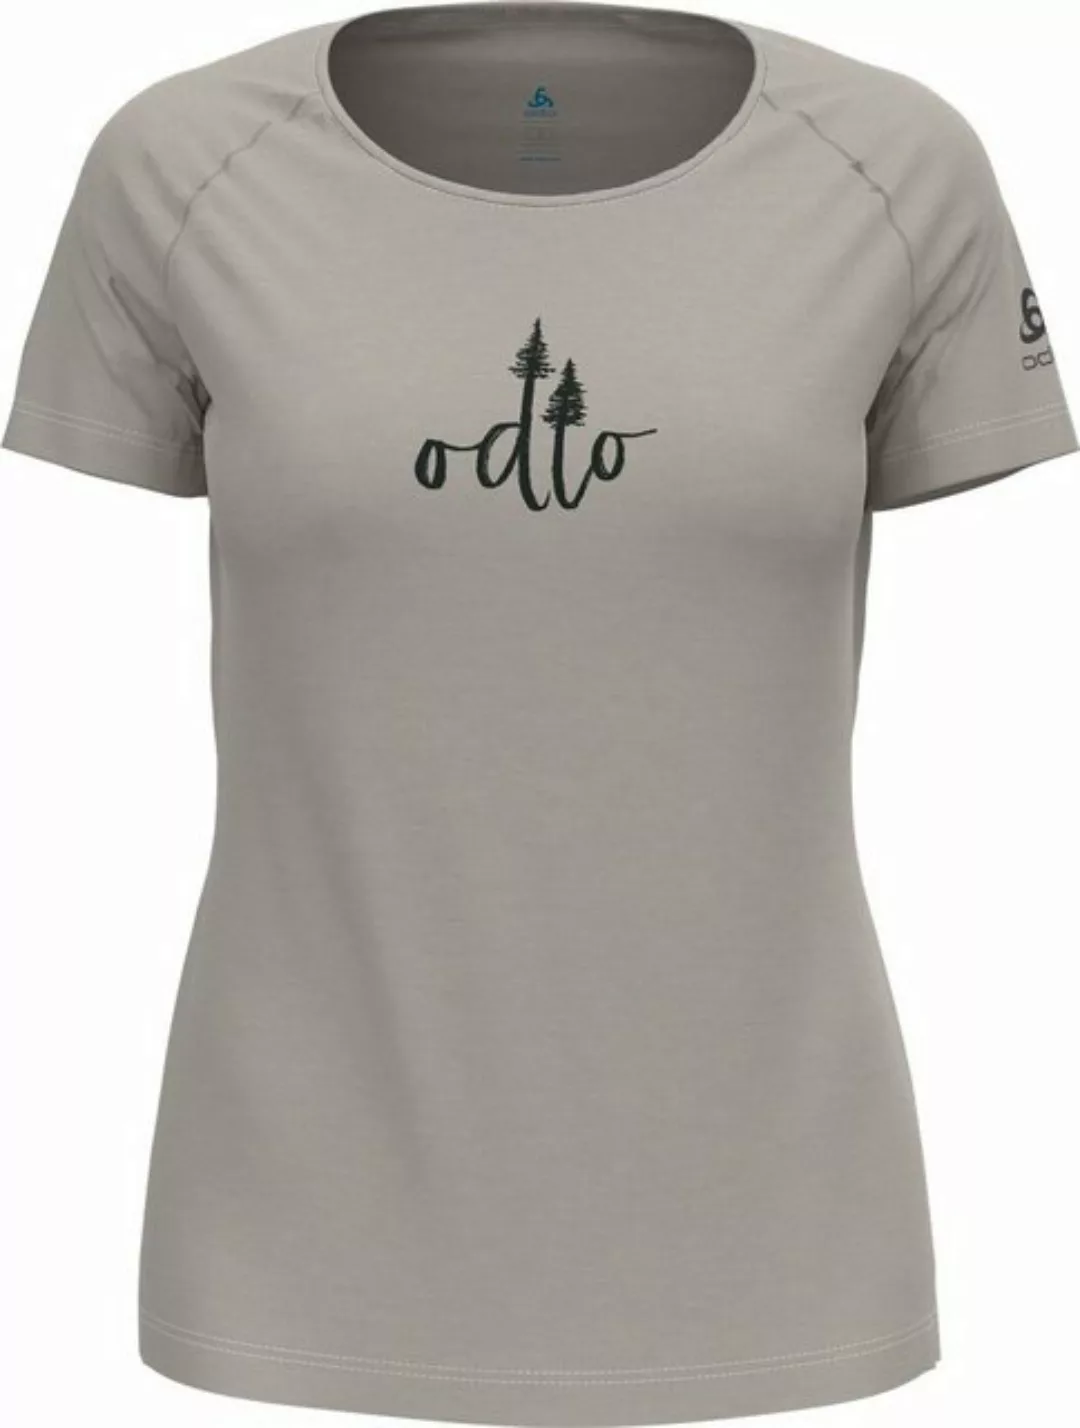 Odlo T-Shirt T-shirt crew neck s/s ASCENT P SILVER CLOUD MELANGE günstig online kaufen